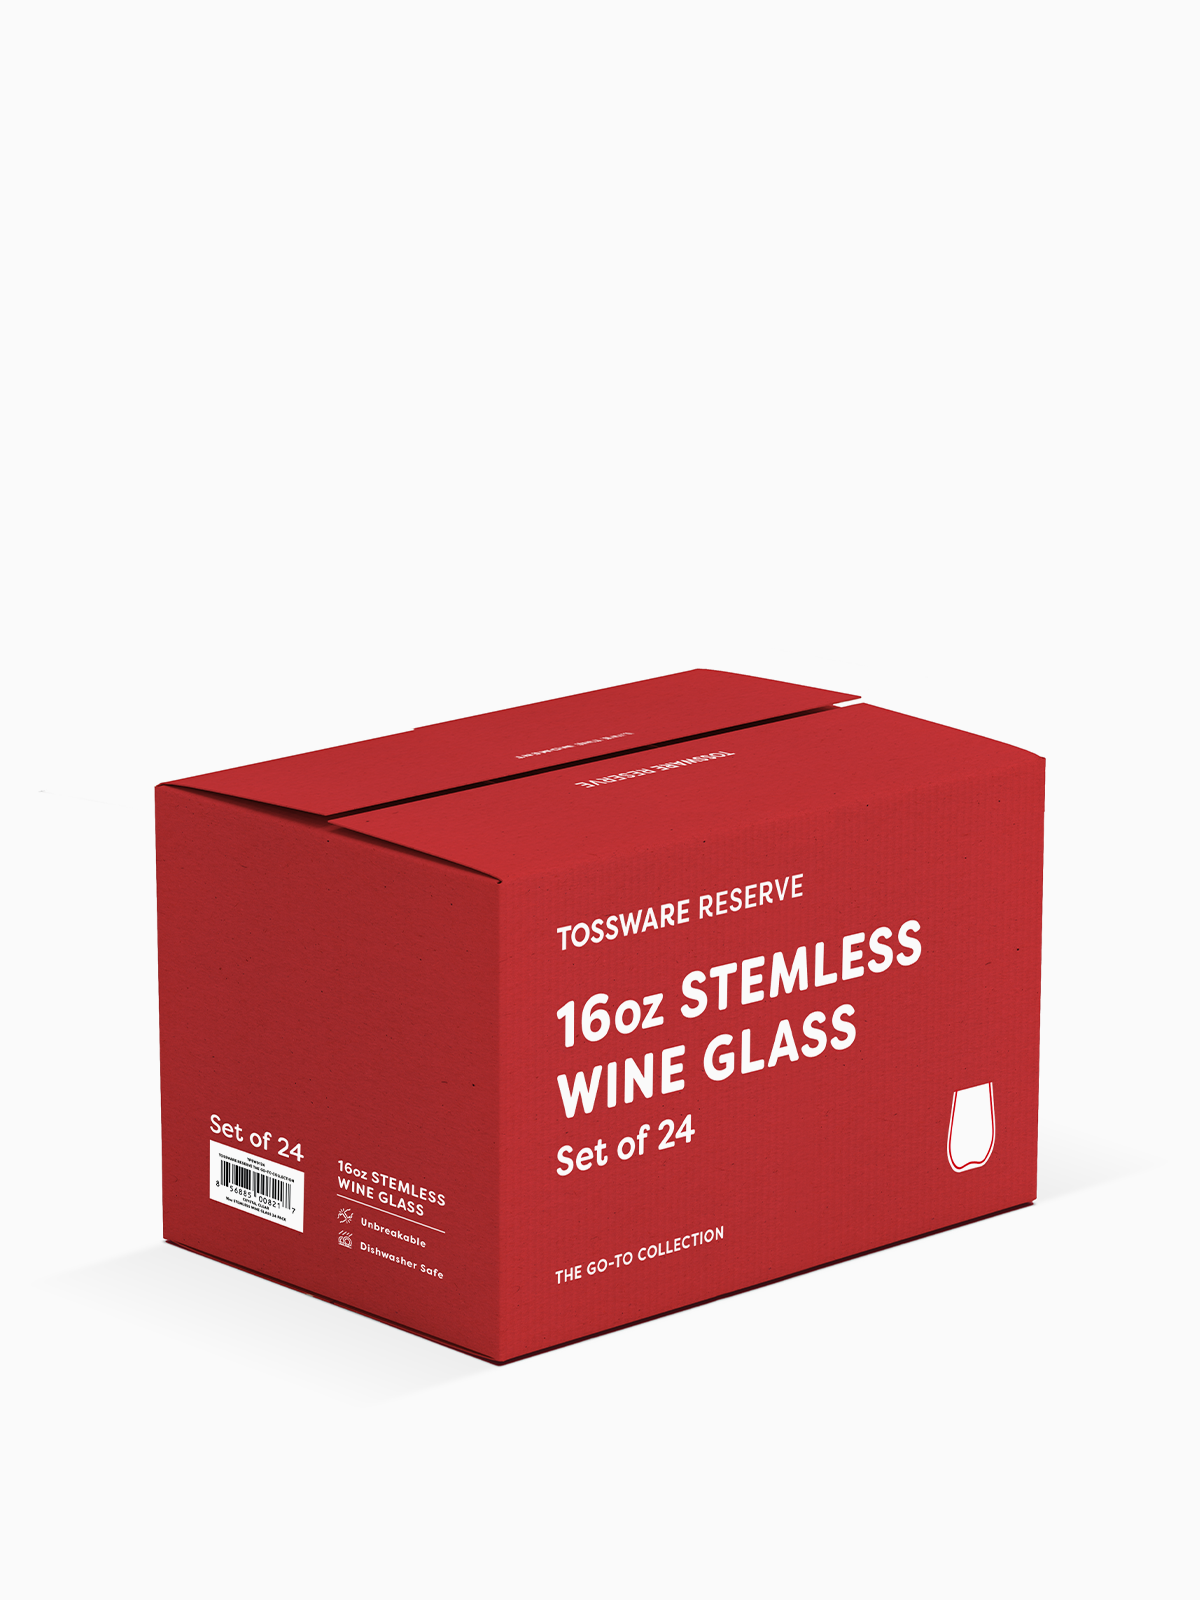 Unbreakable Wine Glasses - 100% Tritan - Shatterproof, Reusable, Dishwasher  Safe (Set of 8 Stemless) by D'Eco 